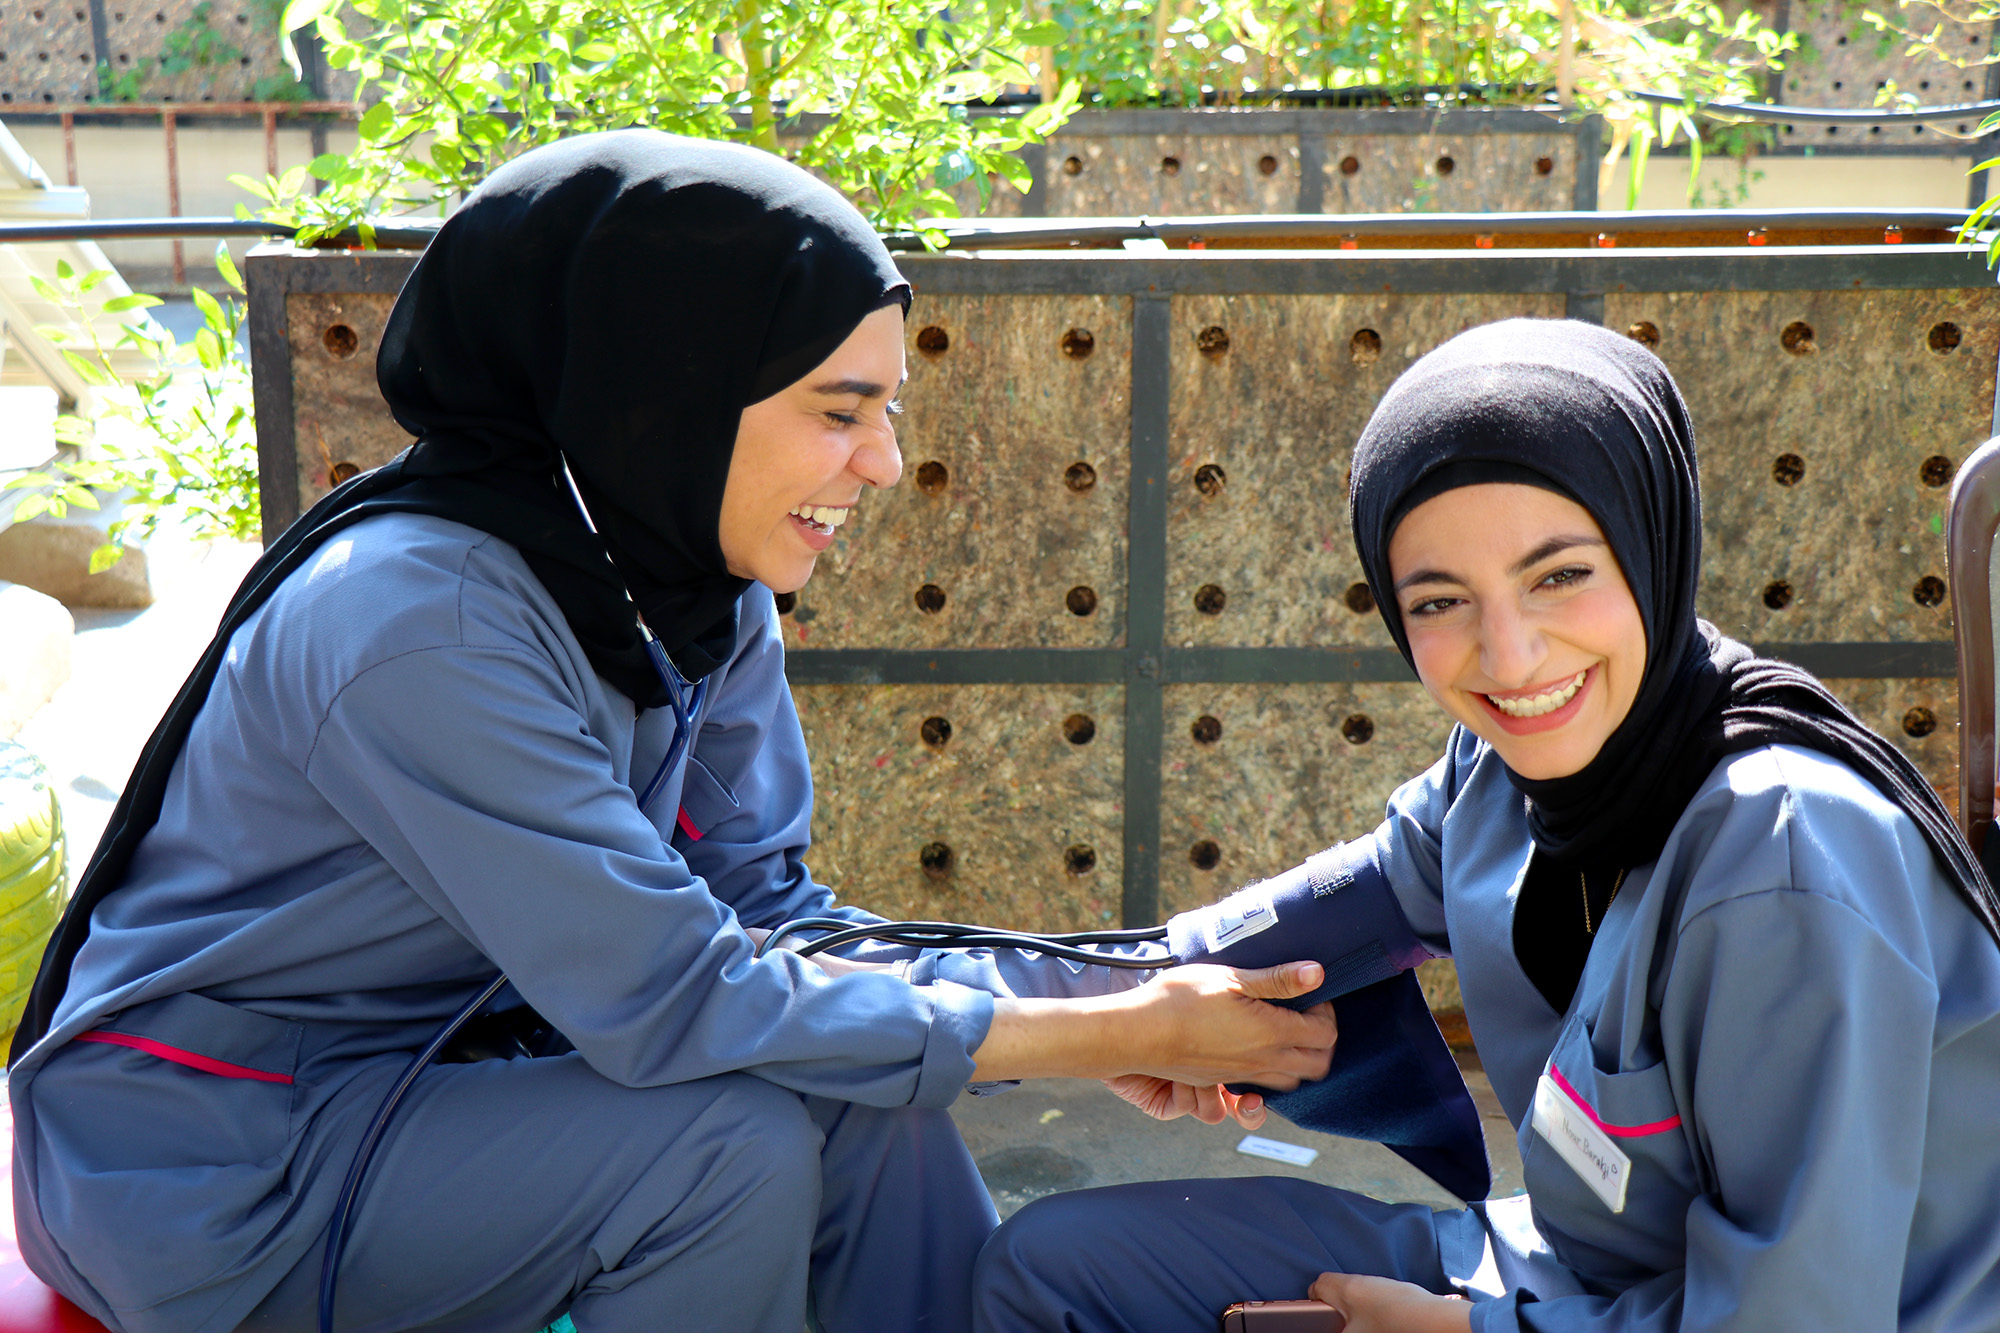 Hiba and Nour practice taking blood pressure readings.